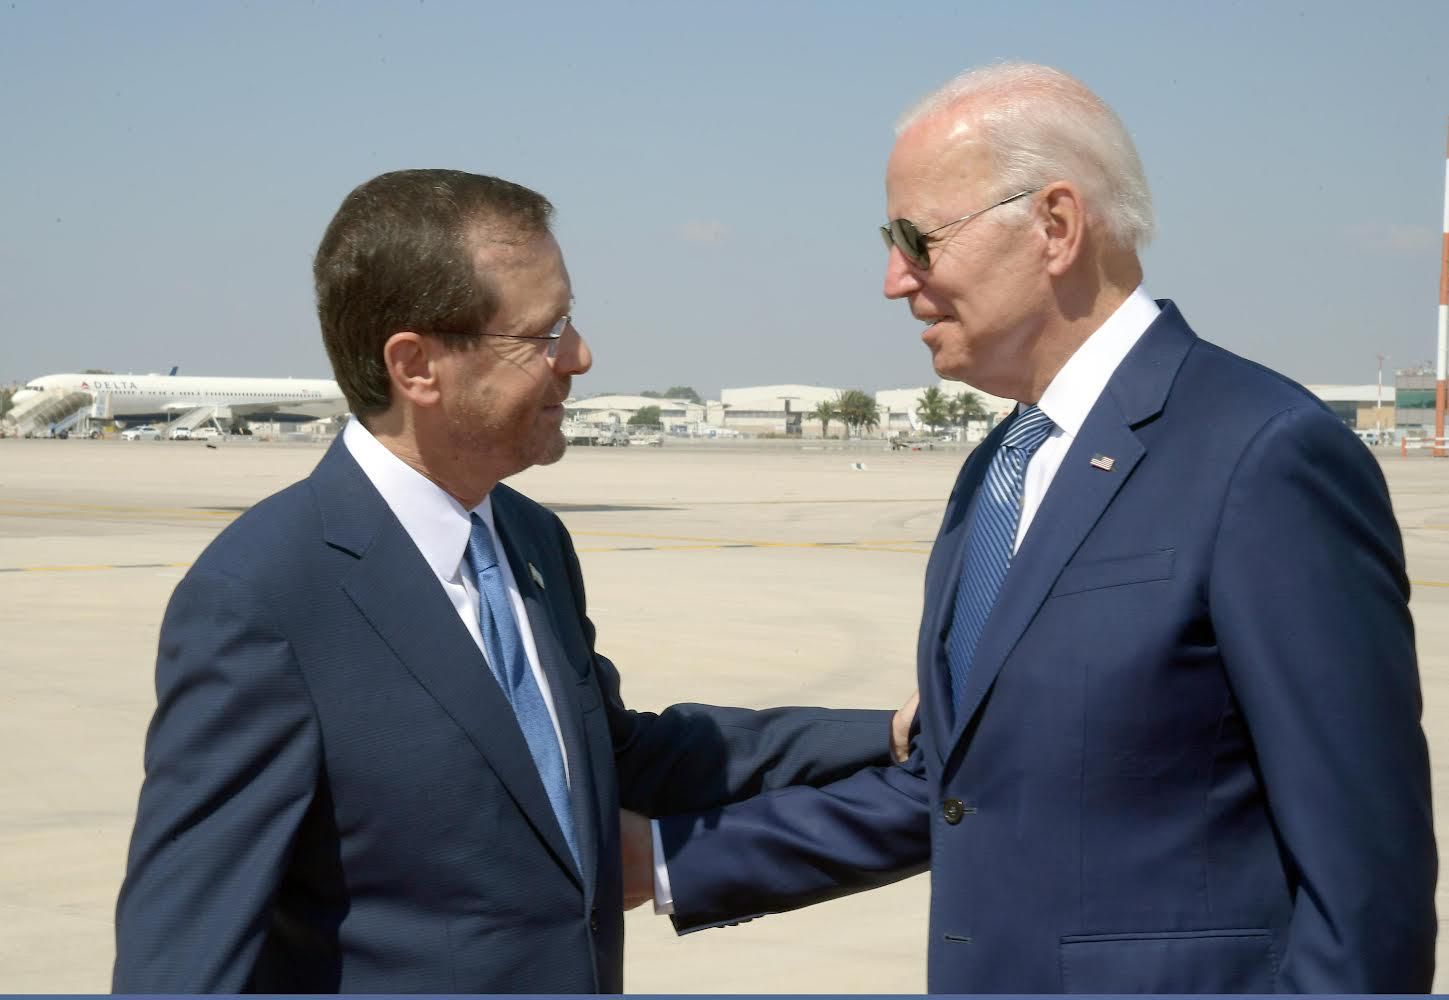 Herzog to meet Biden at White House on October 26